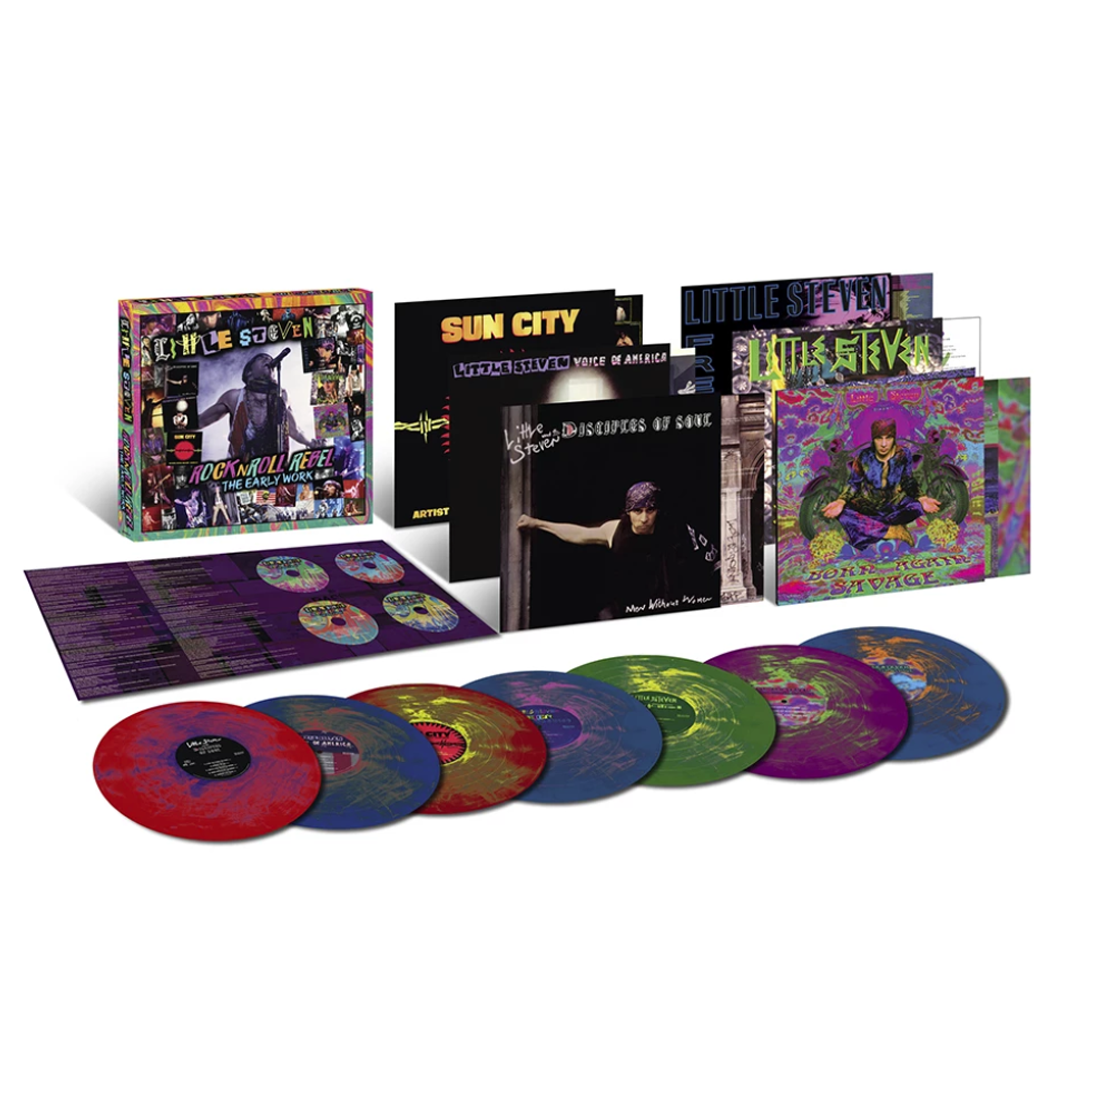 Steven Van Zandt - Rock N Roll Rebel – The Early Work Career: Exclusive Colour Vinyl 7LP Box Set